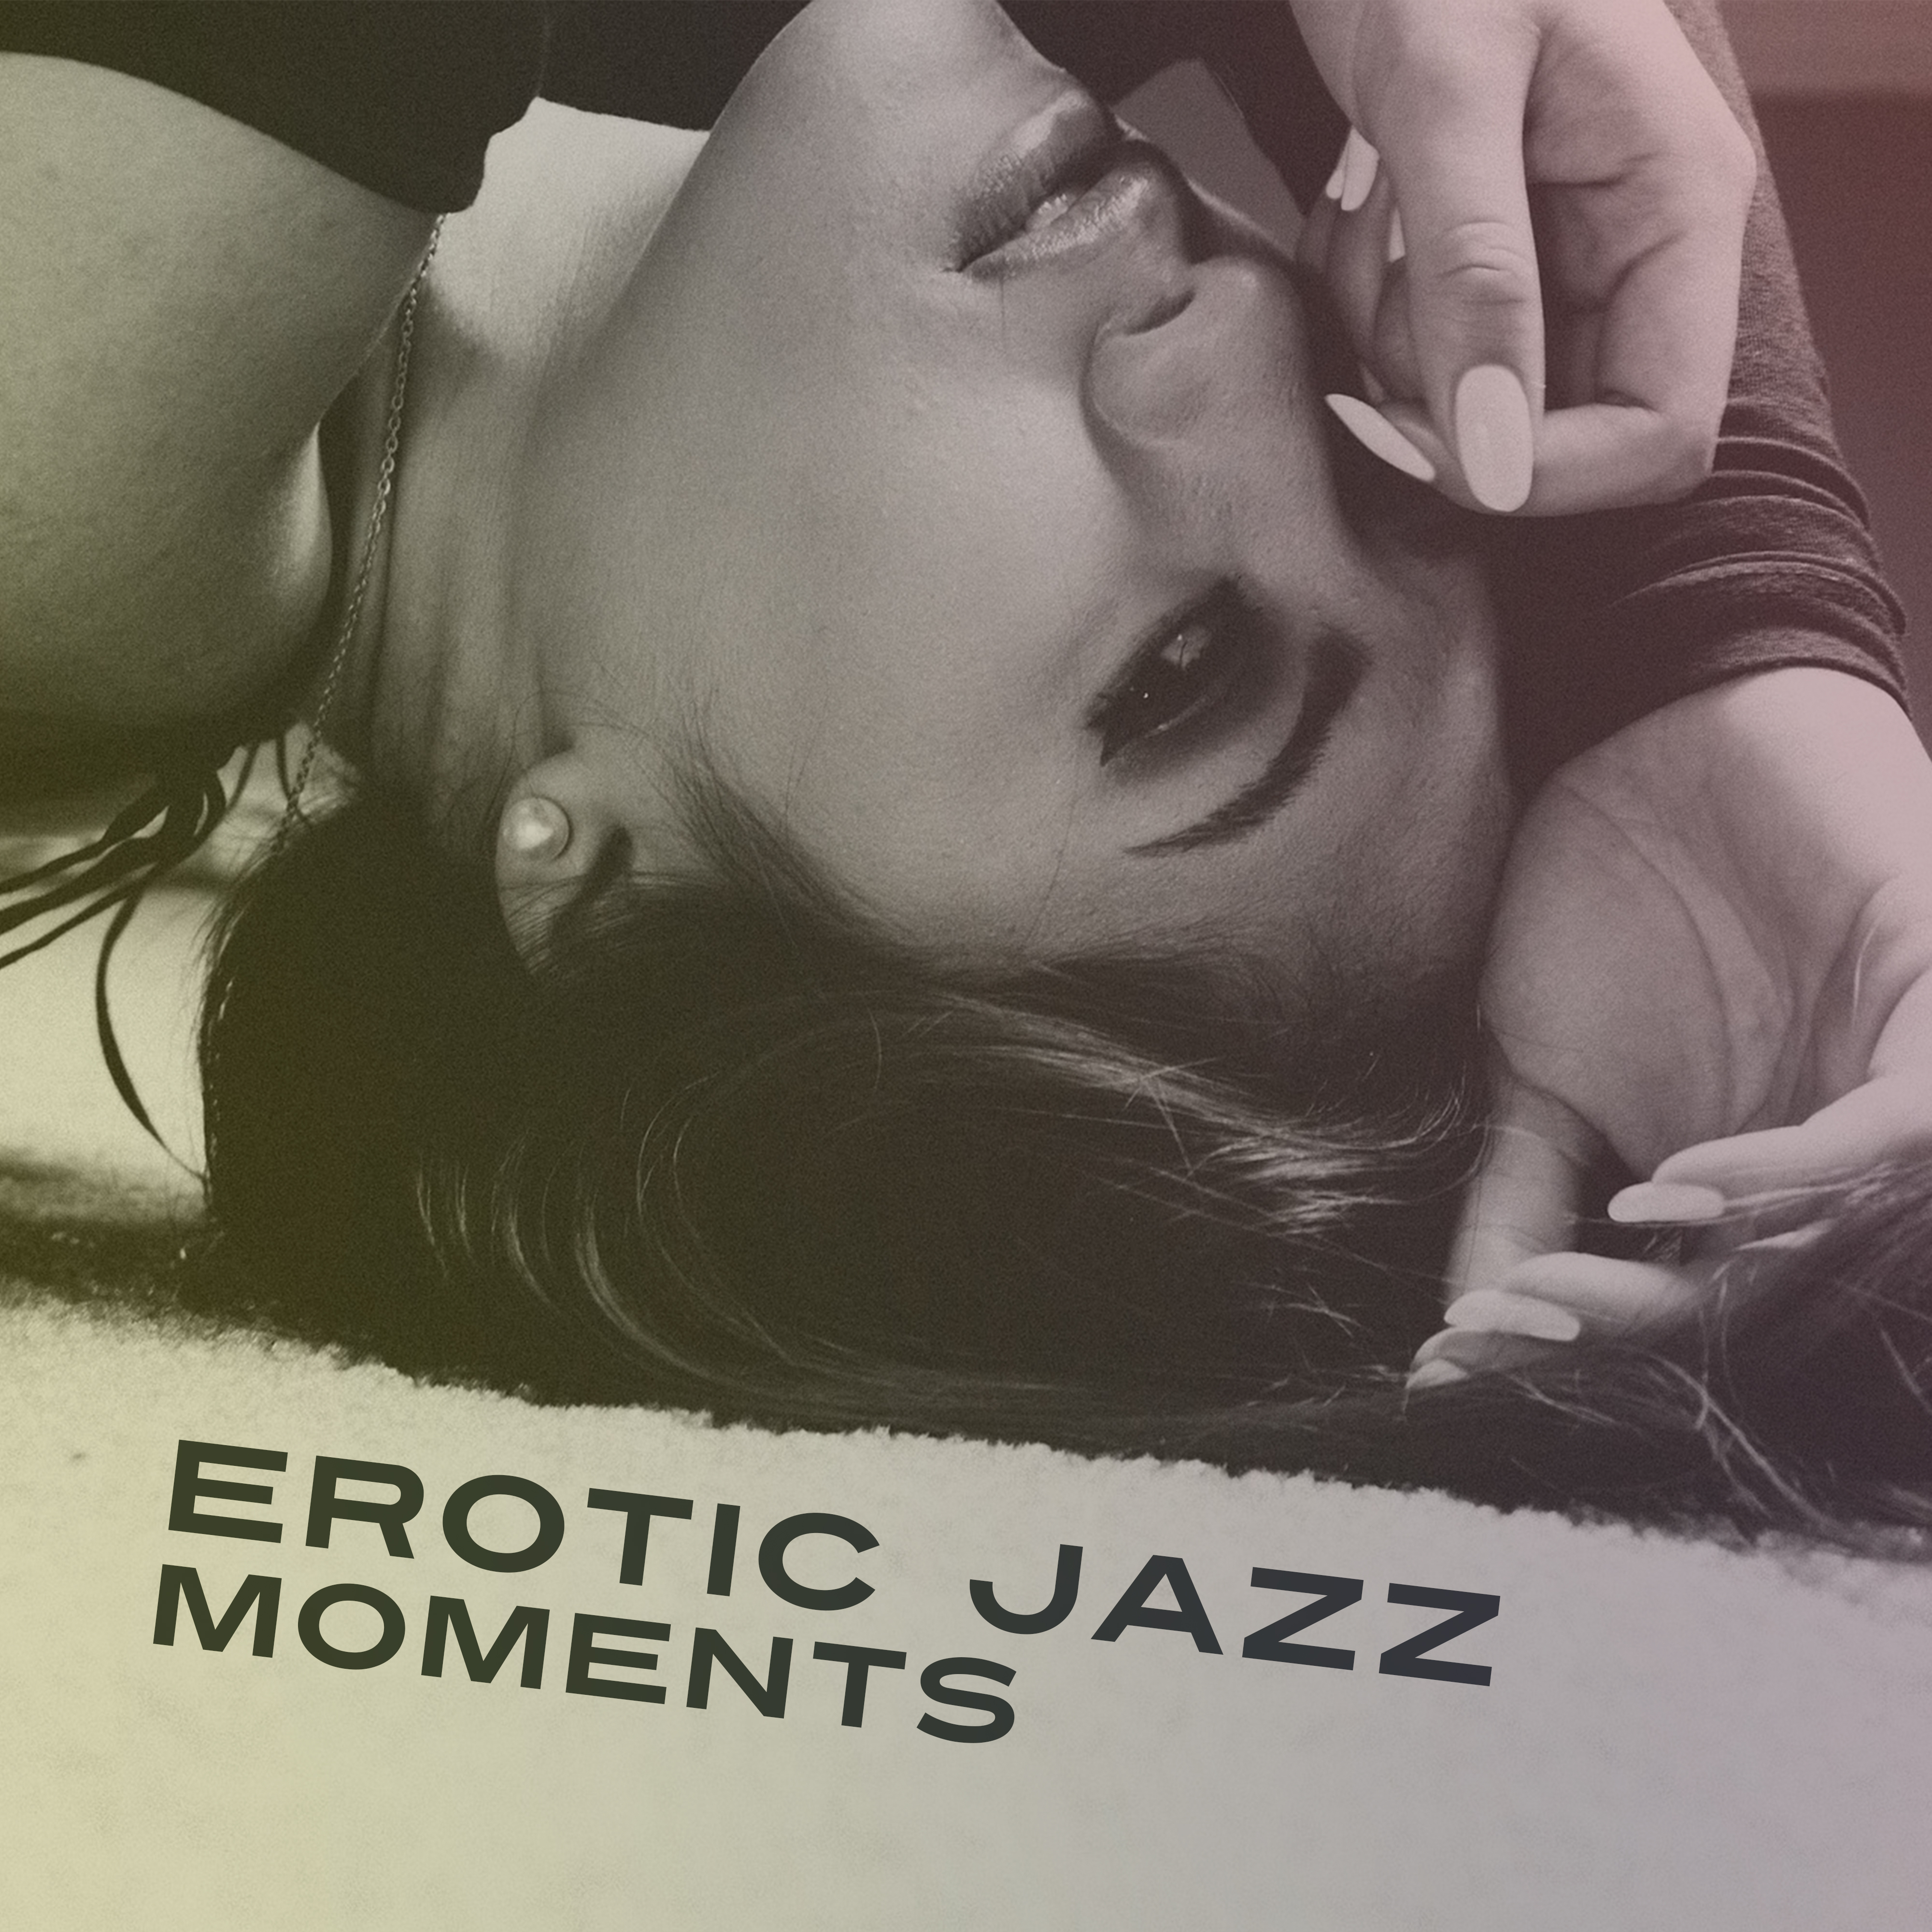 Erotic Jazz Moments  Relaxation Music at Night, Sensual Piano Jazz,  Songs, Romantic Evening, Night Jazz